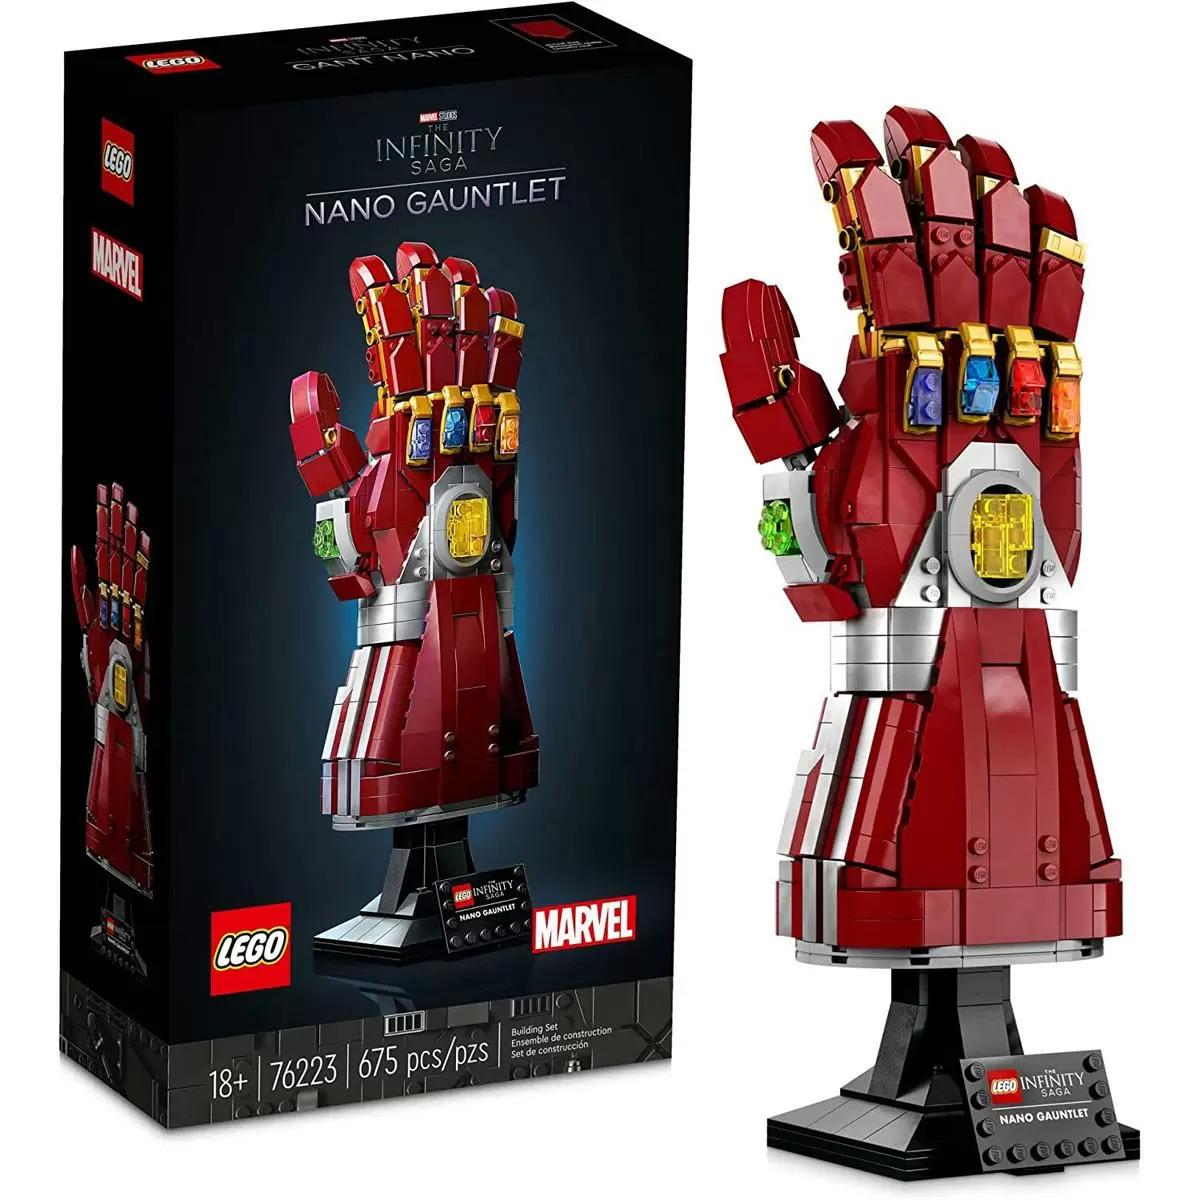 LEGO Marvel Nano Gauntlet Iron Man Building Set for $48.99 Shipped